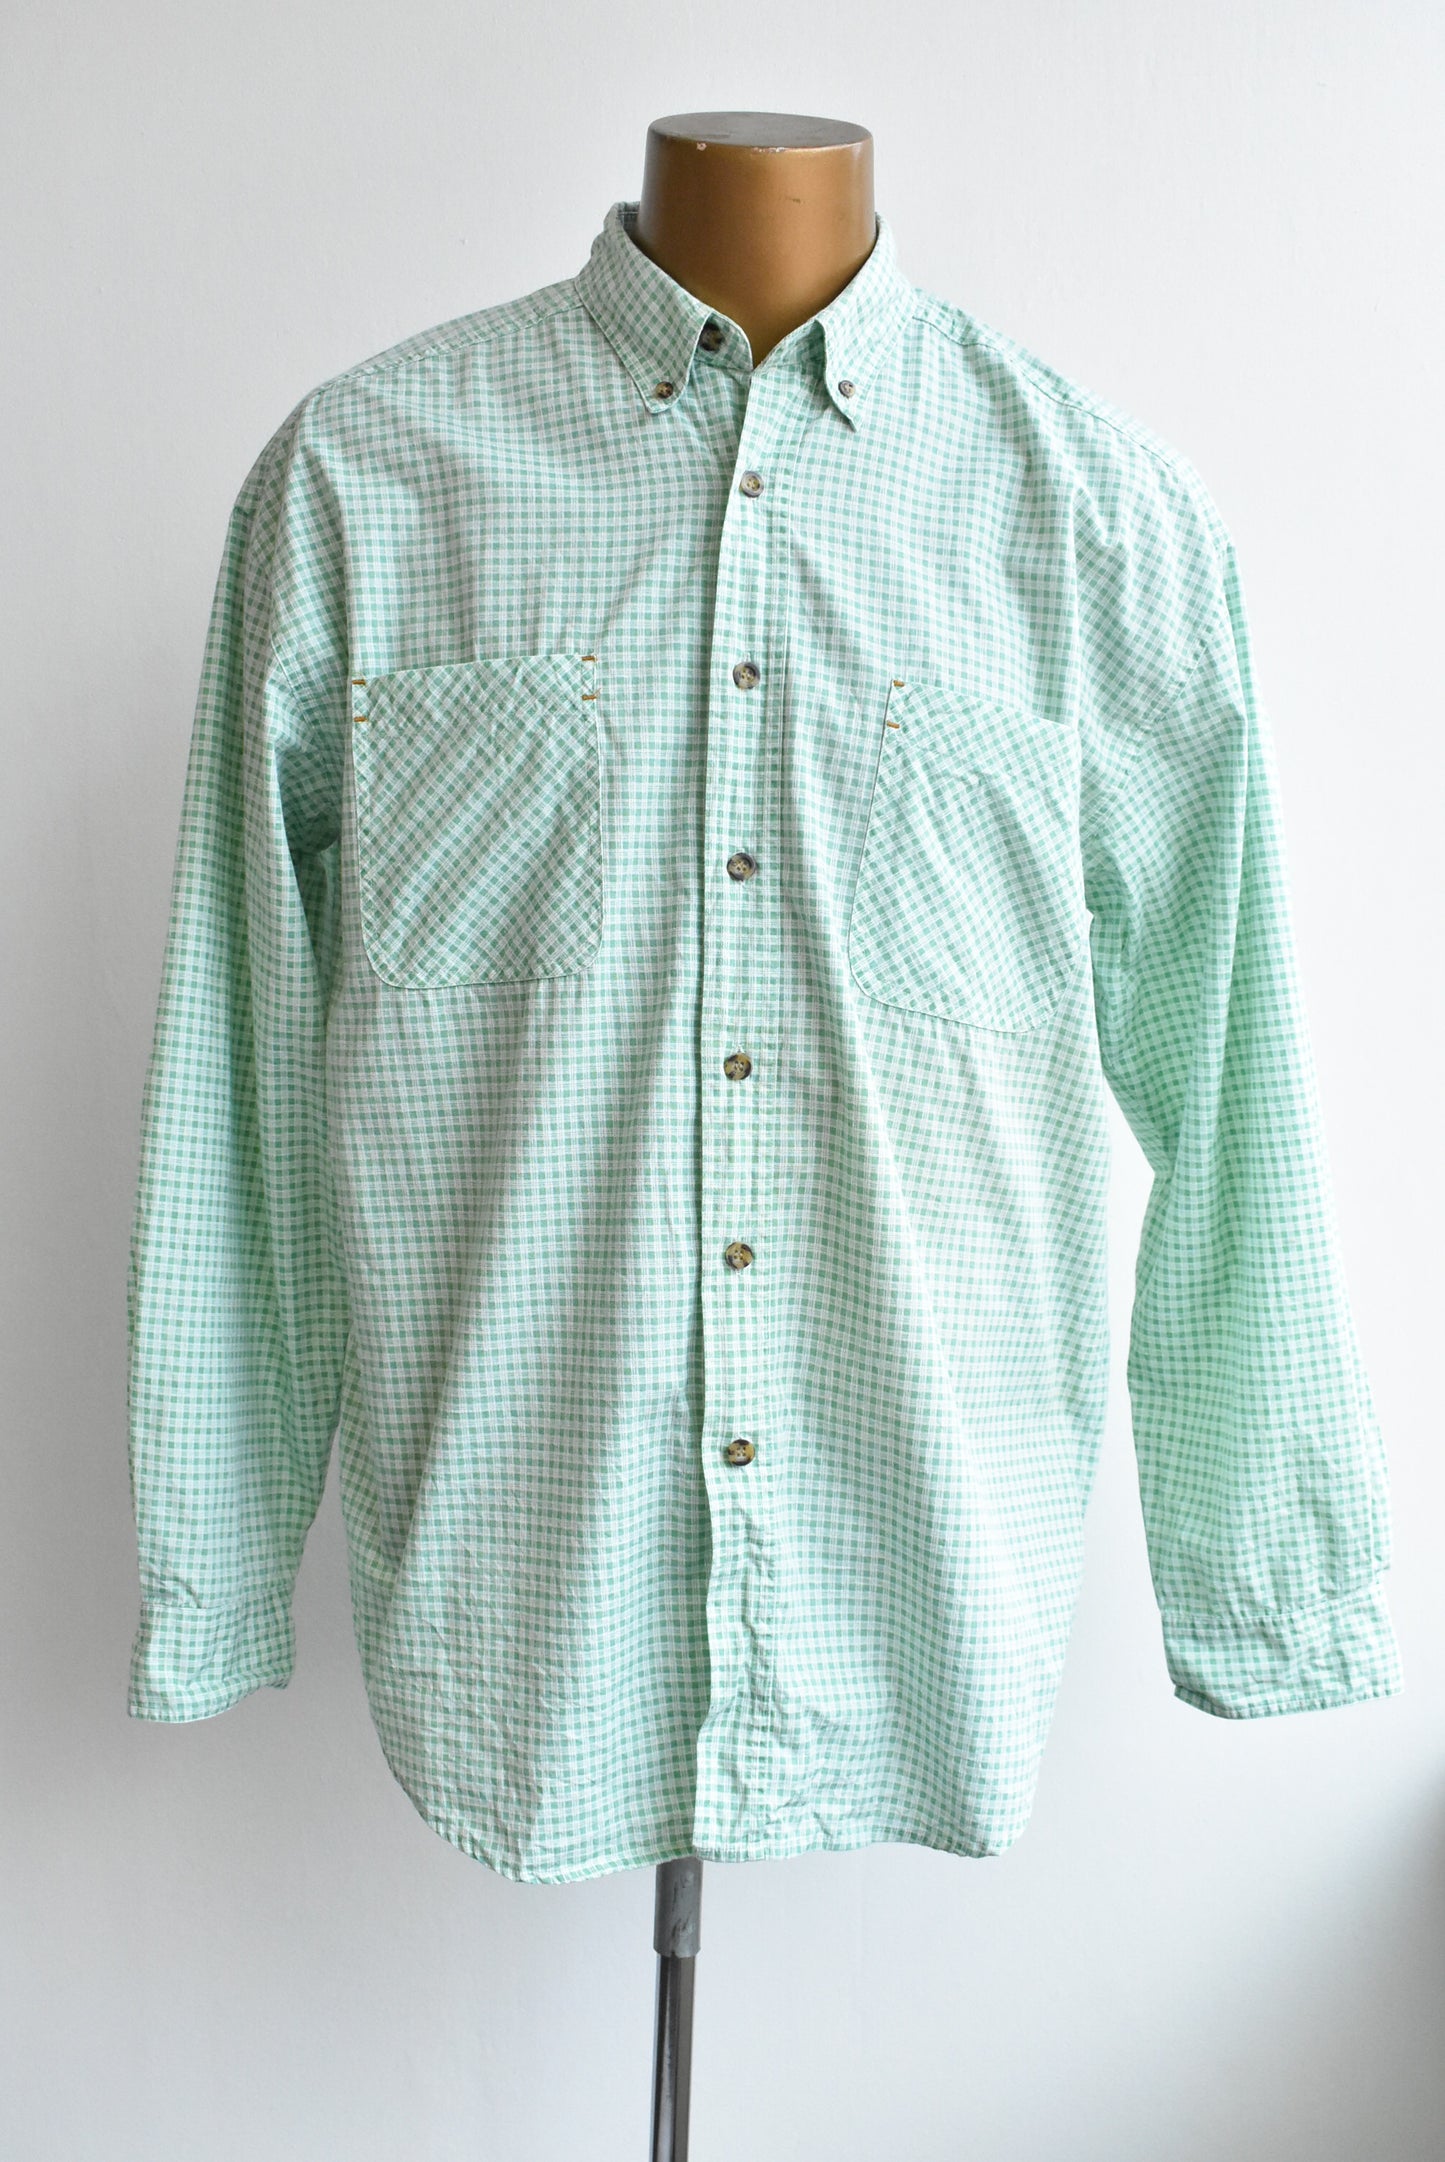 Rusty Gears green/white plaid shirt, size L